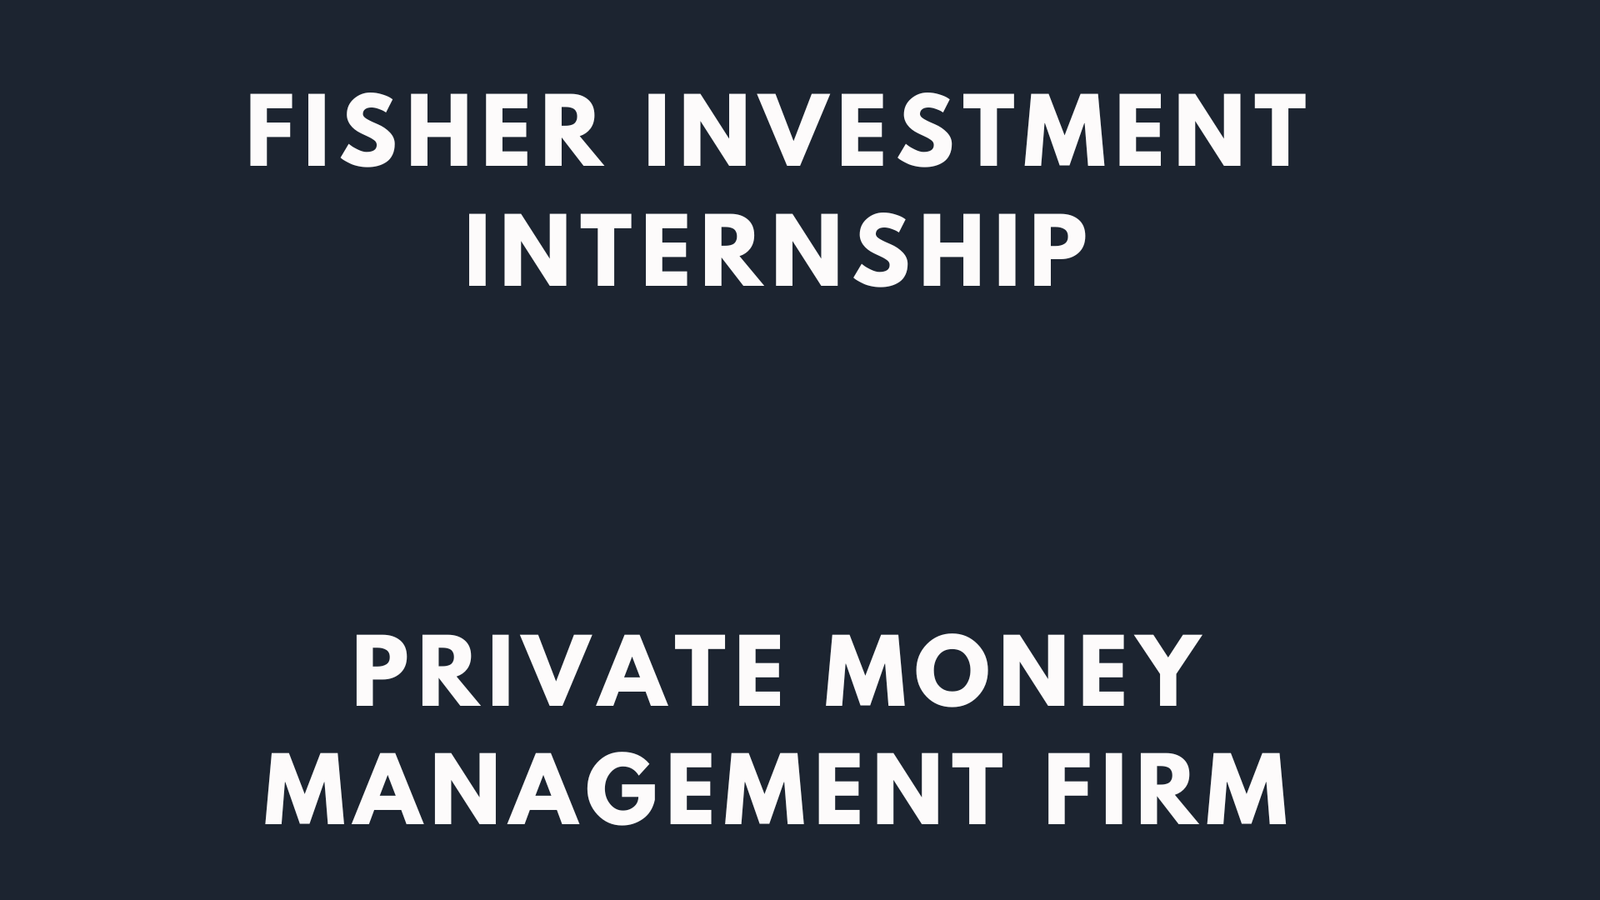 Fisher Investments Internship